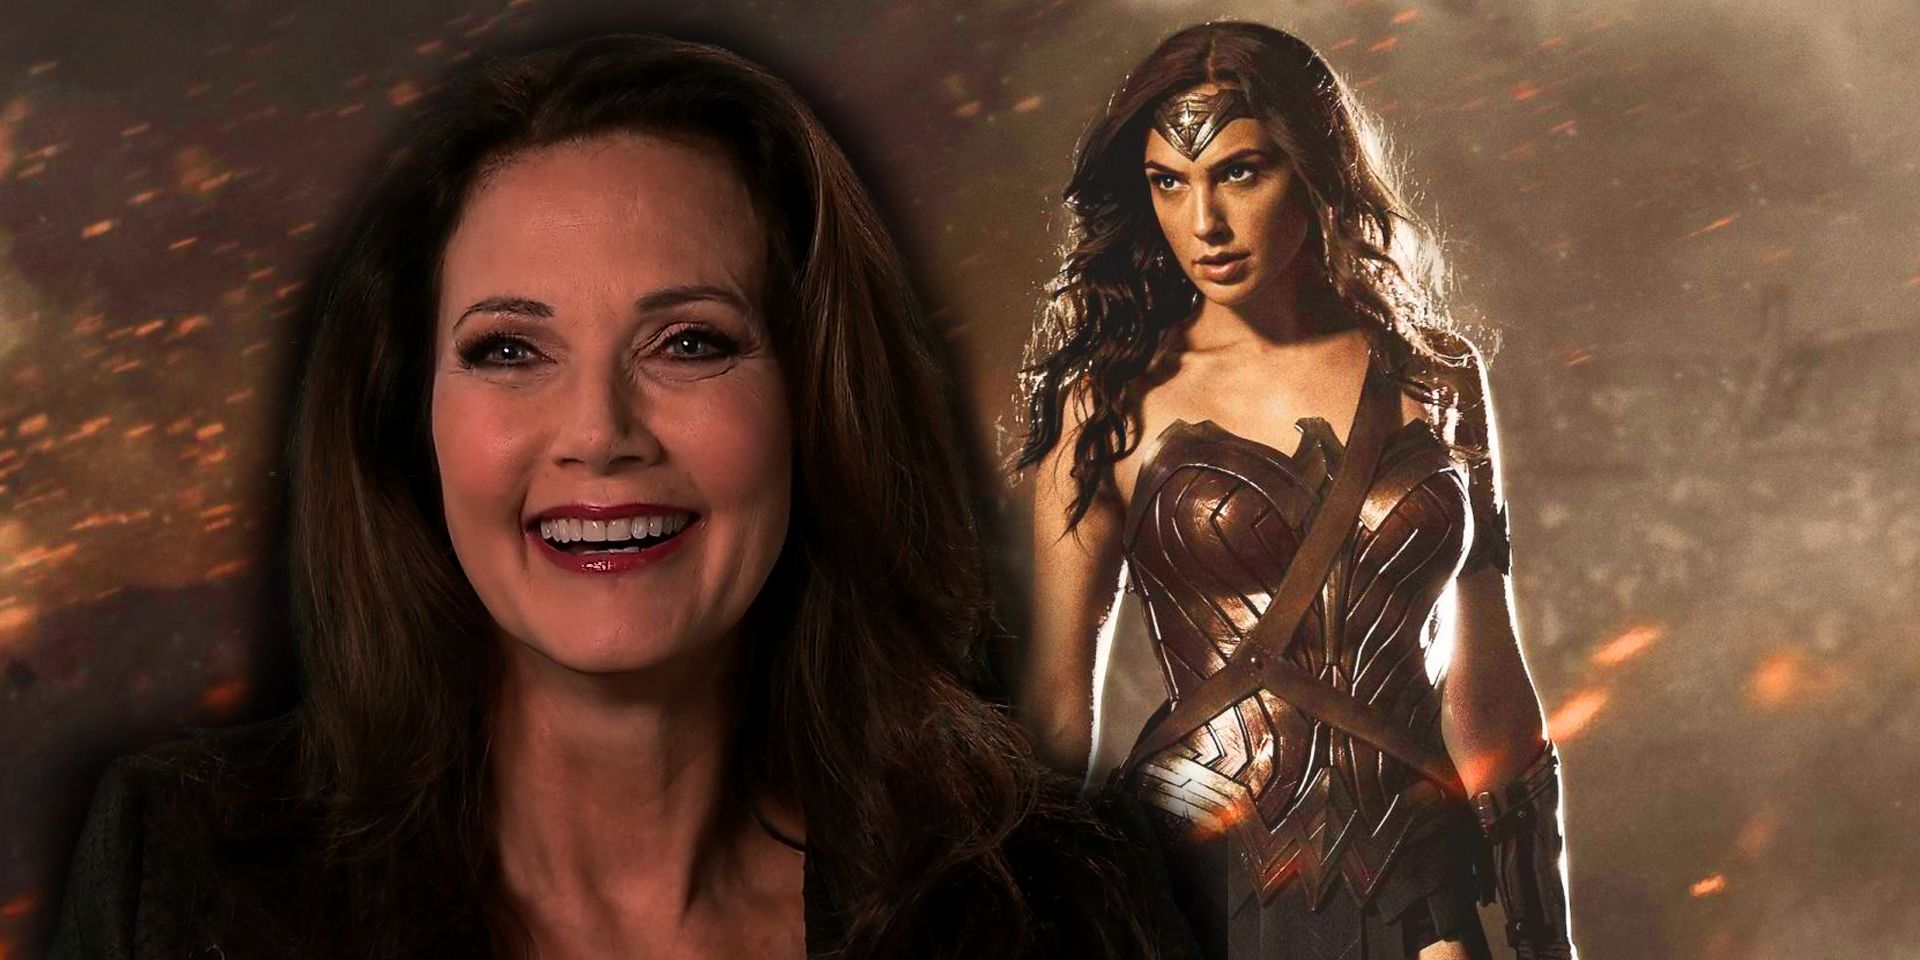 Lynda Carter headshot superimposed over an image of Gal Gadot as Wonder Woman